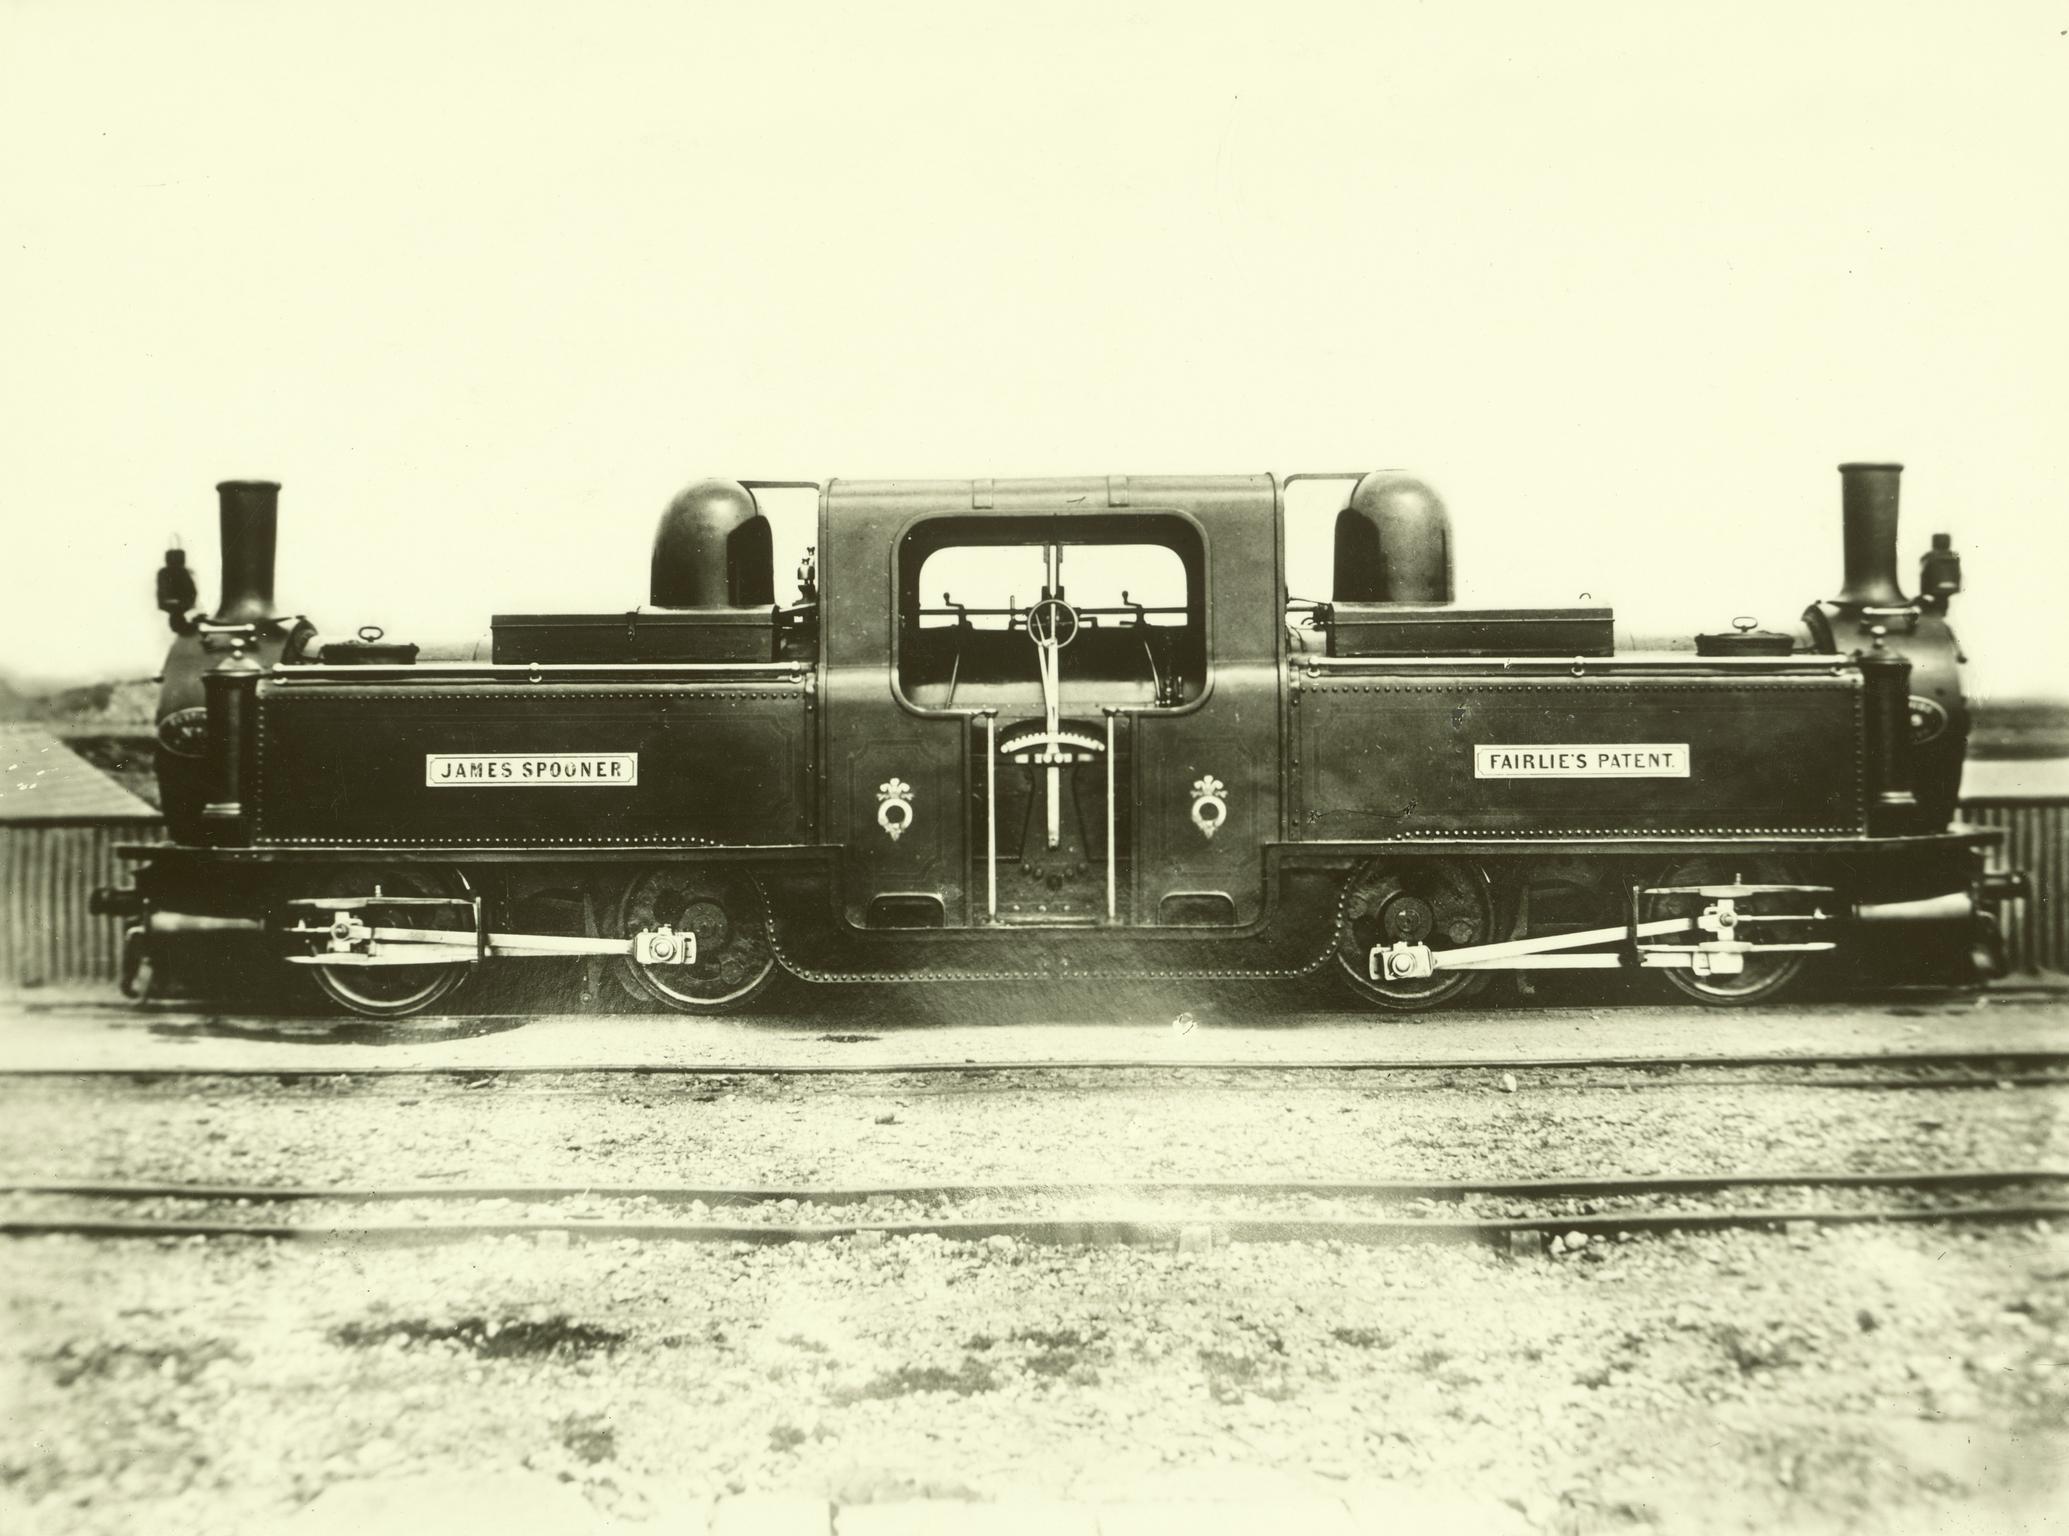 Festiniog Railway locomotive, photograph